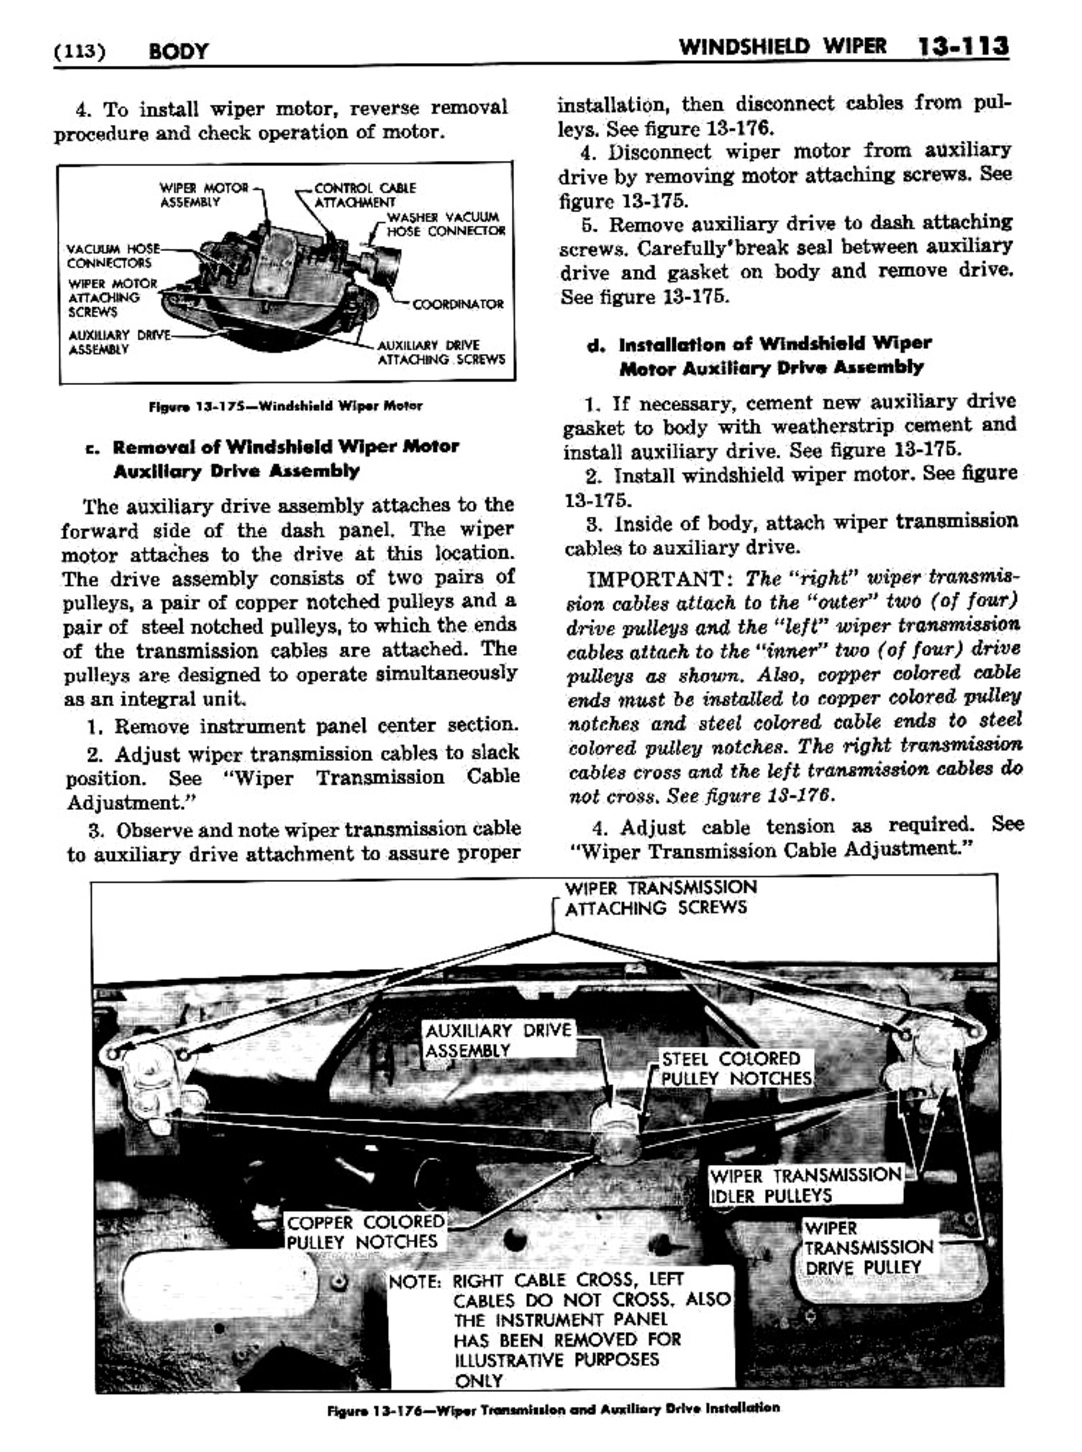 n_1957 Buick Body Service Manual-115-115.jpg